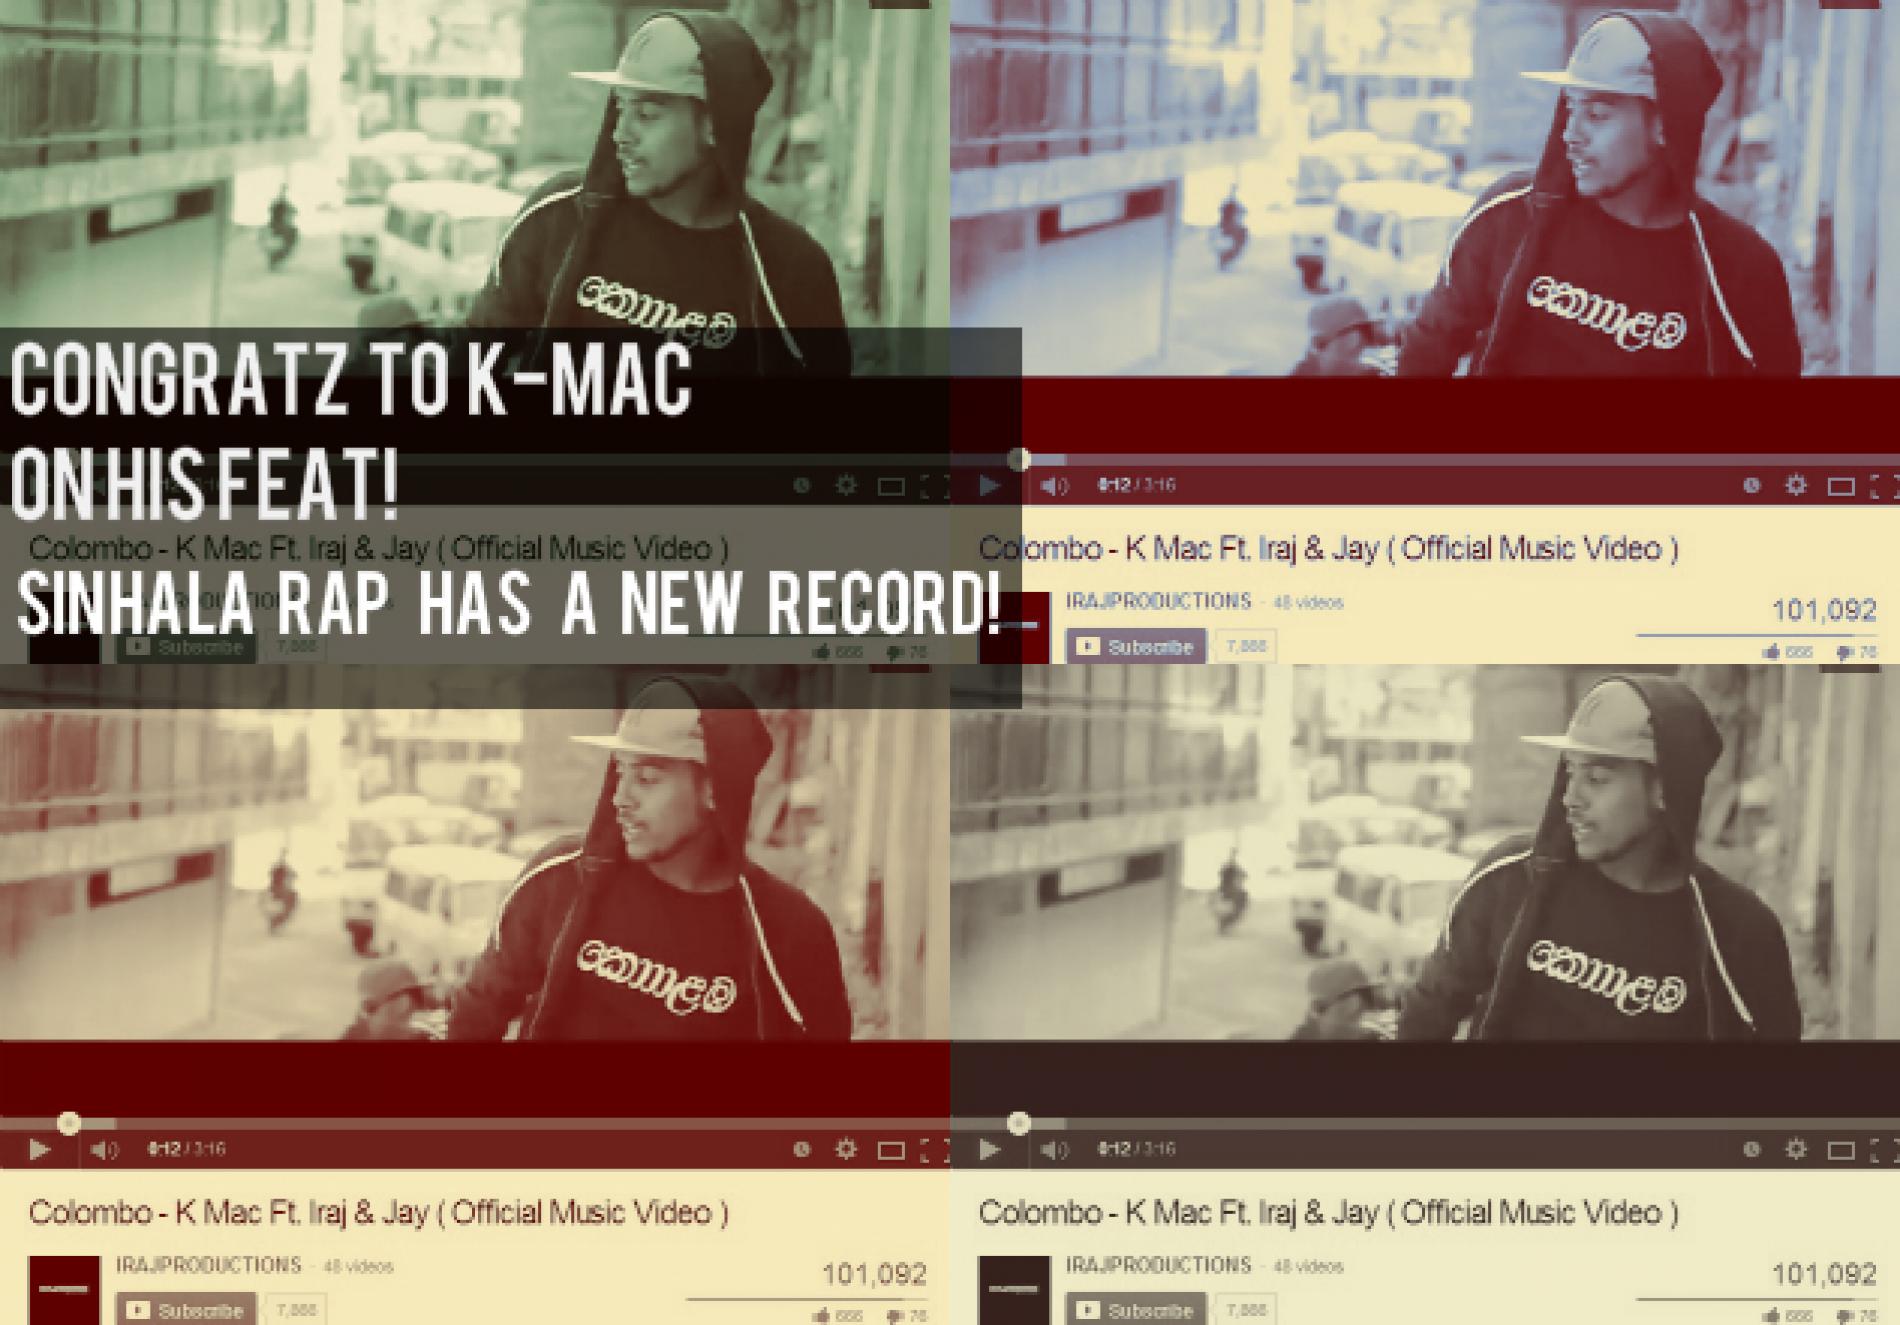 K-Mac’s “Colombo” Hits A Record For A Sinhala Rap Video